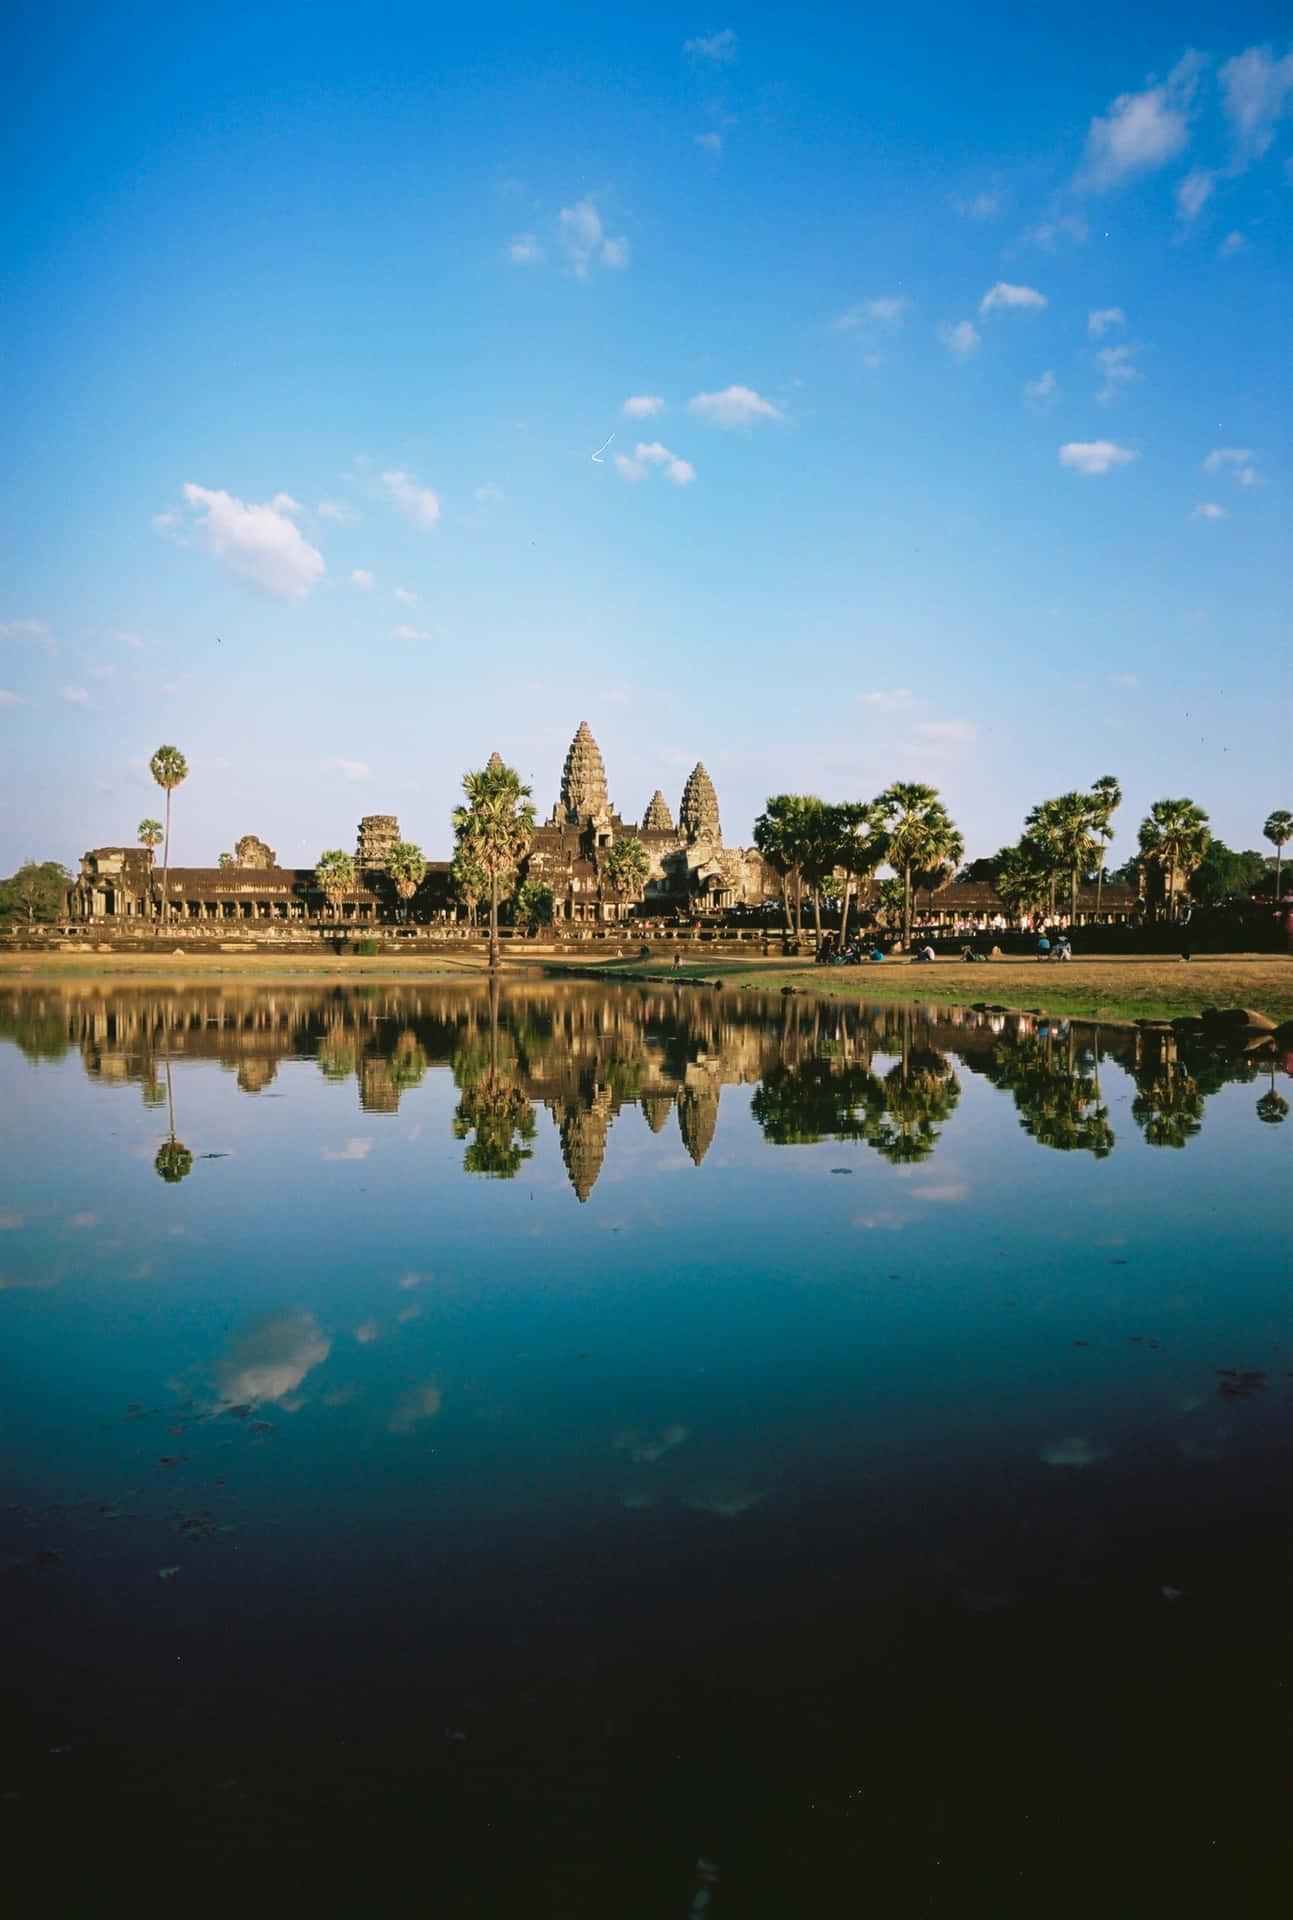 Angkor Thom 2433 X 3612 Wallpaper